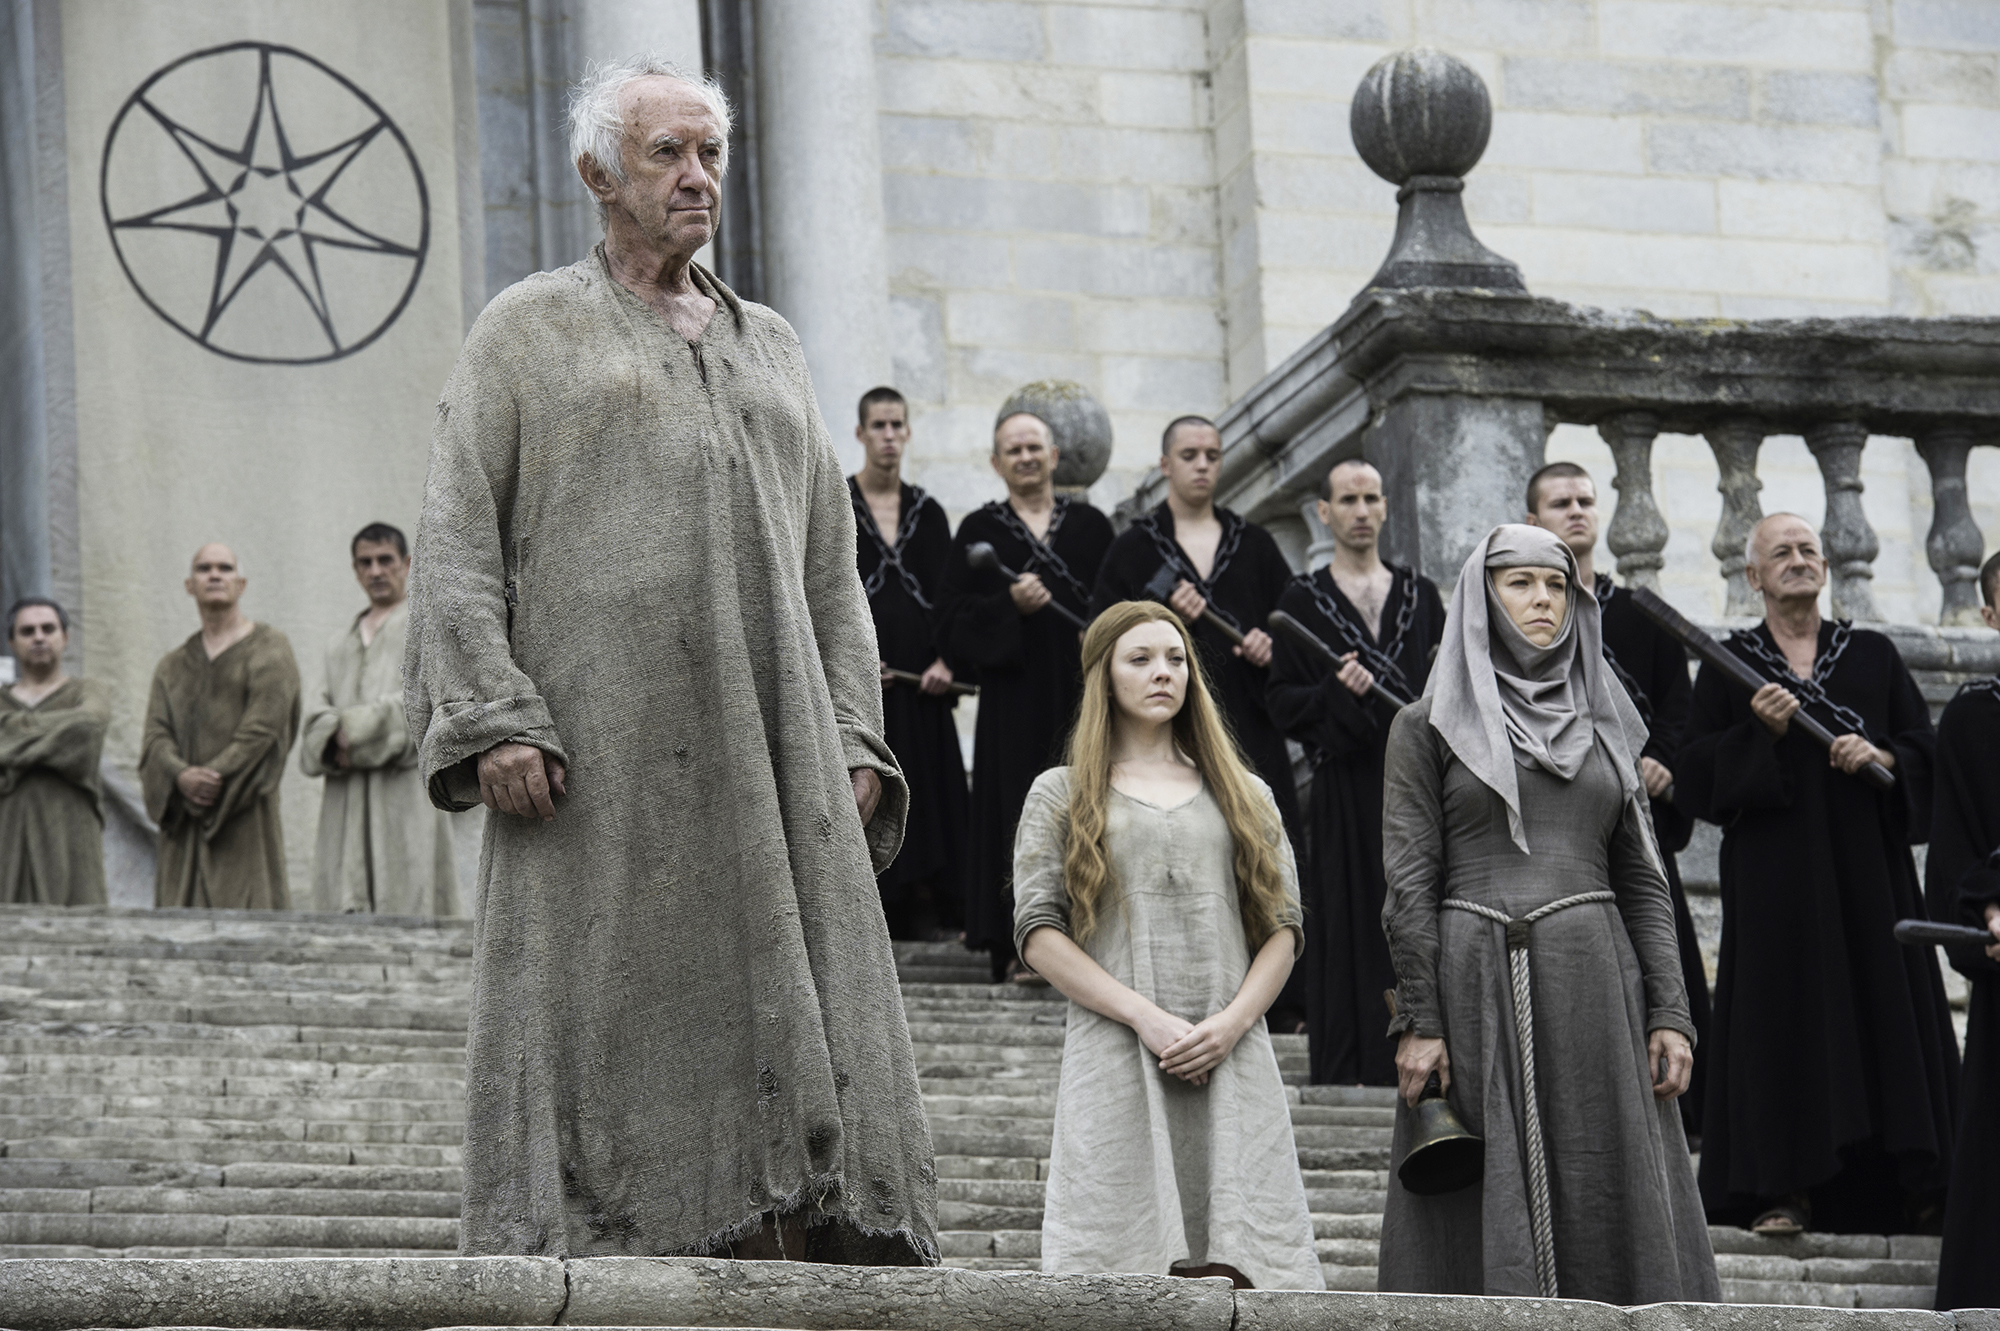 Jonathan Pryce, Natalie Dormer, and Hannah Waddingham in Game of Thrones season 6, episode 6.